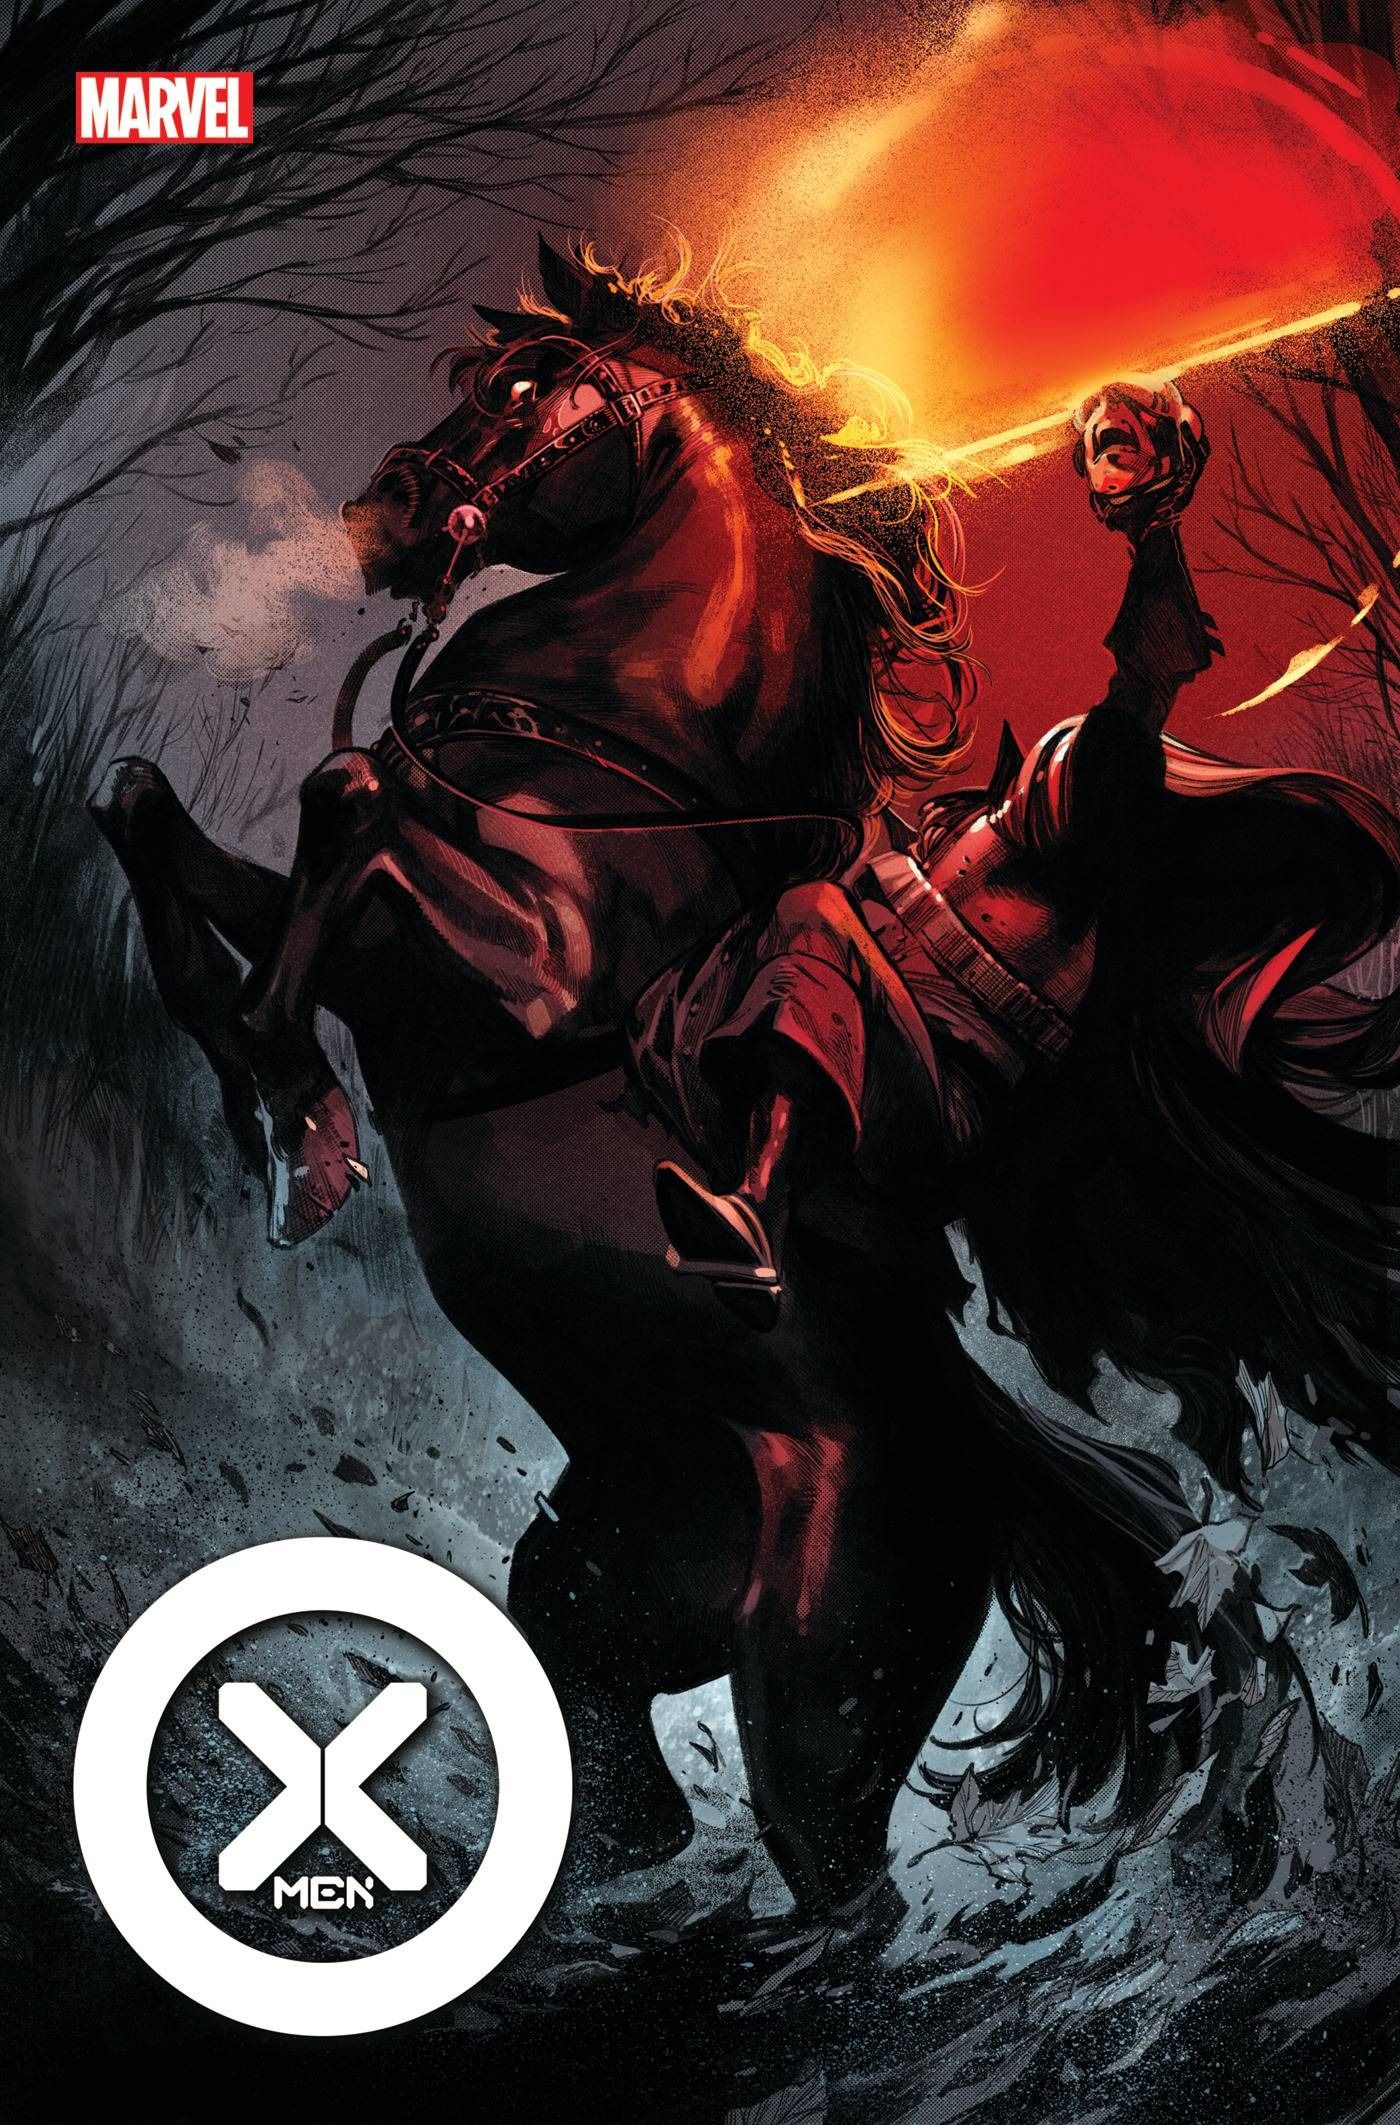 X-Men #4 Halloween comic cover art featuring Cyclops as the Headless Horseman by Pepe Larraz and Martr Gracia